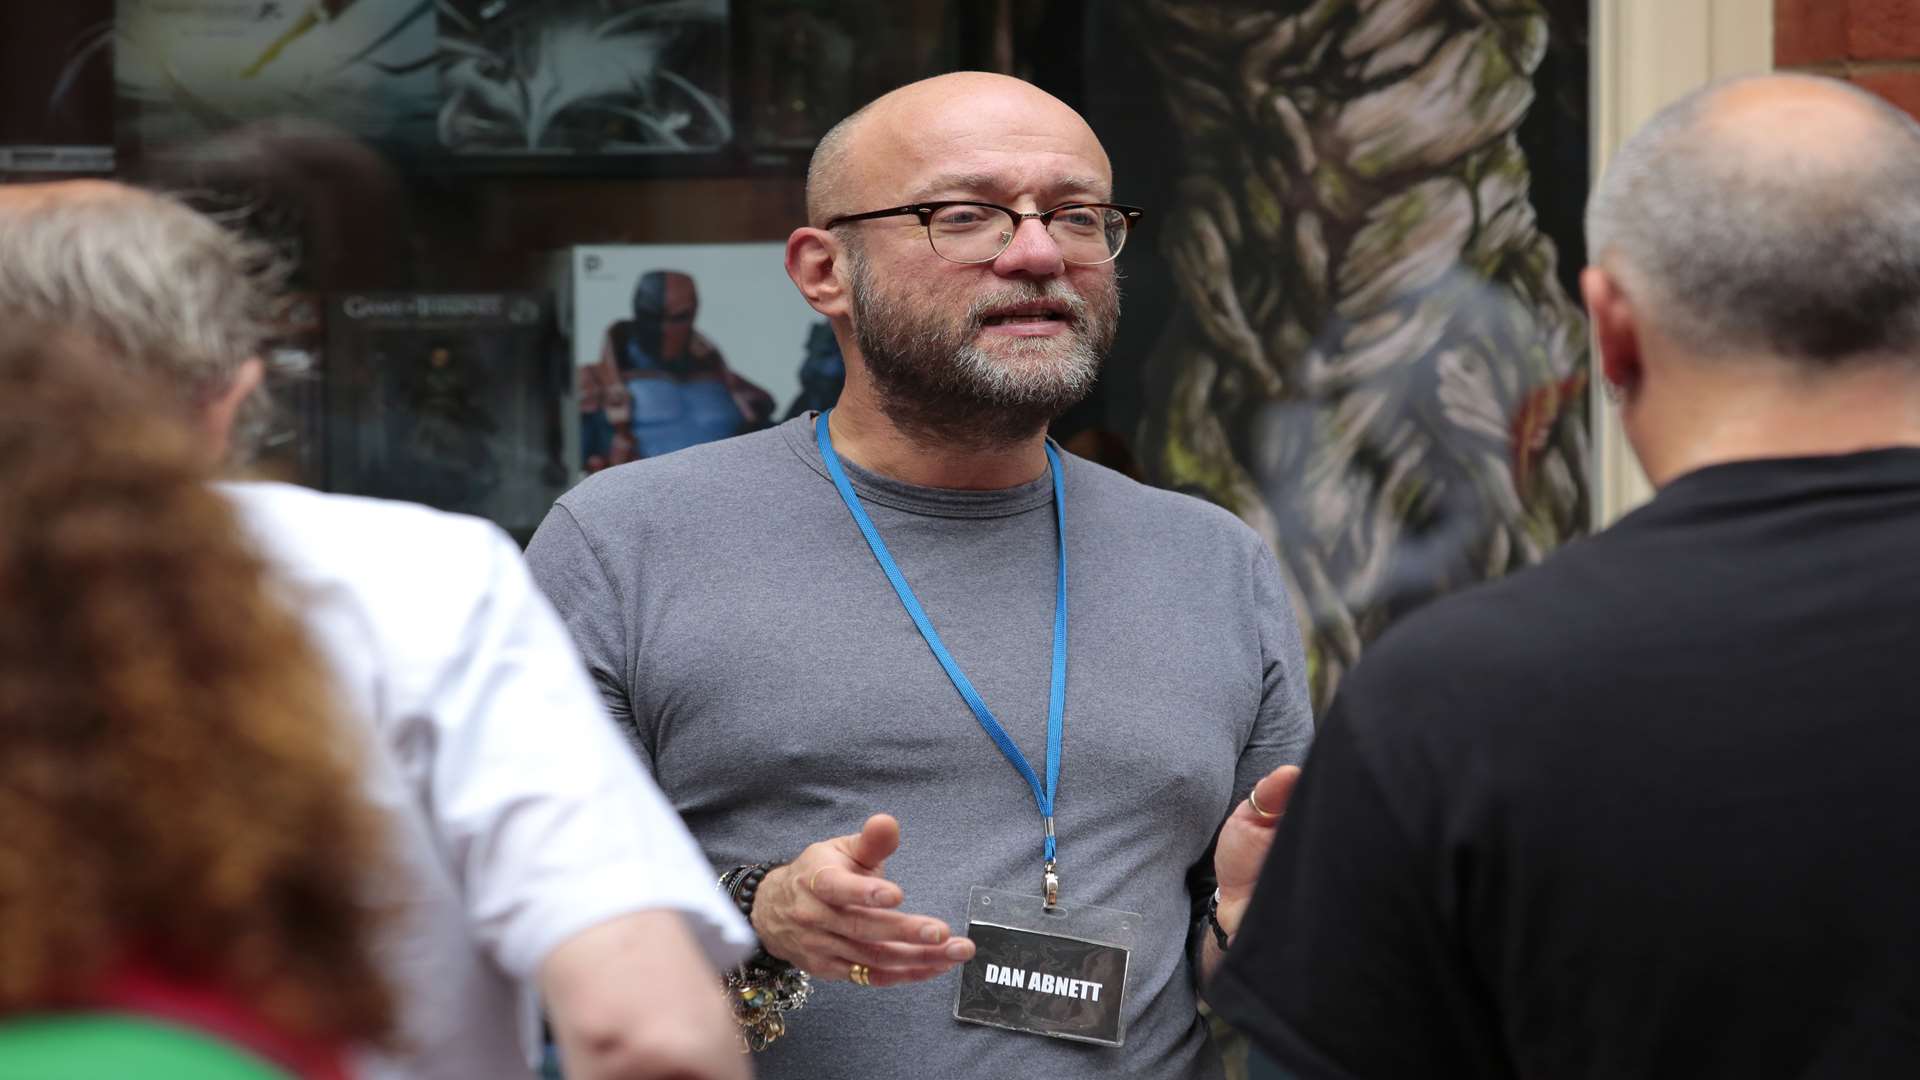 Dan Abnett, comic book writer and novelist